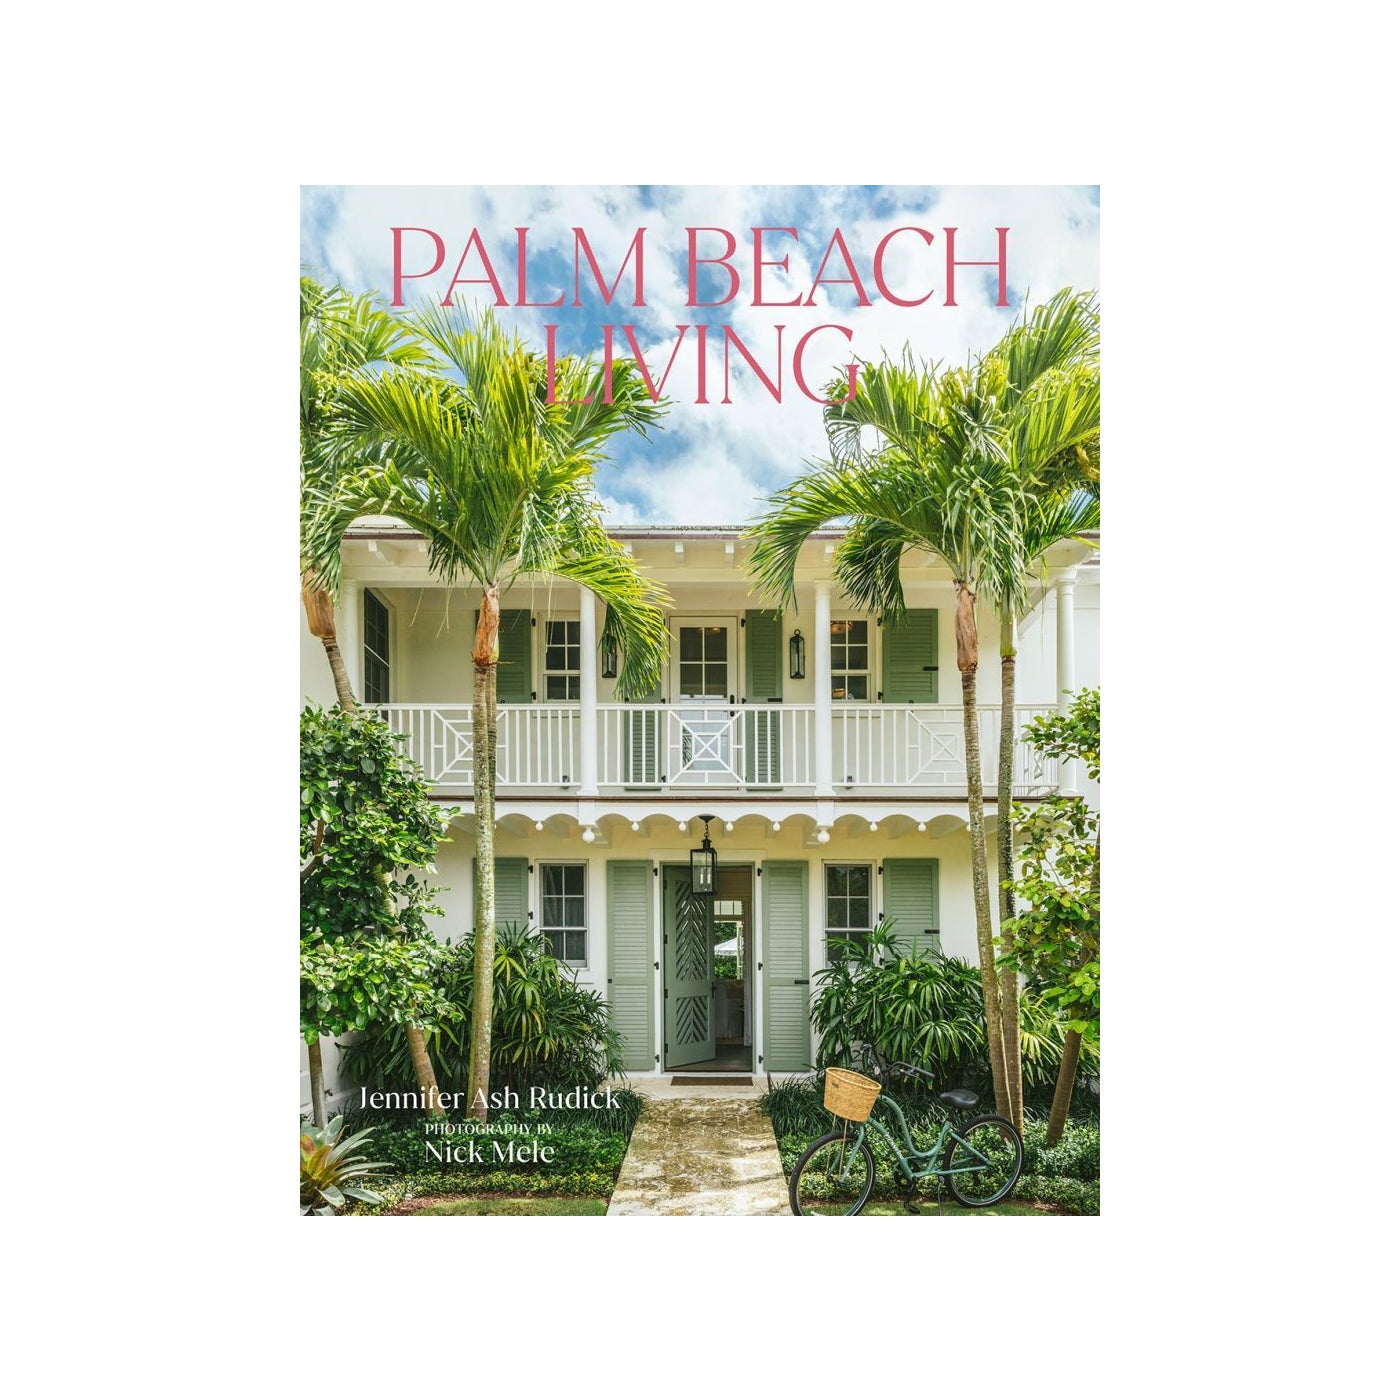 Palm Beach Living by Jennifer Ash Rudick